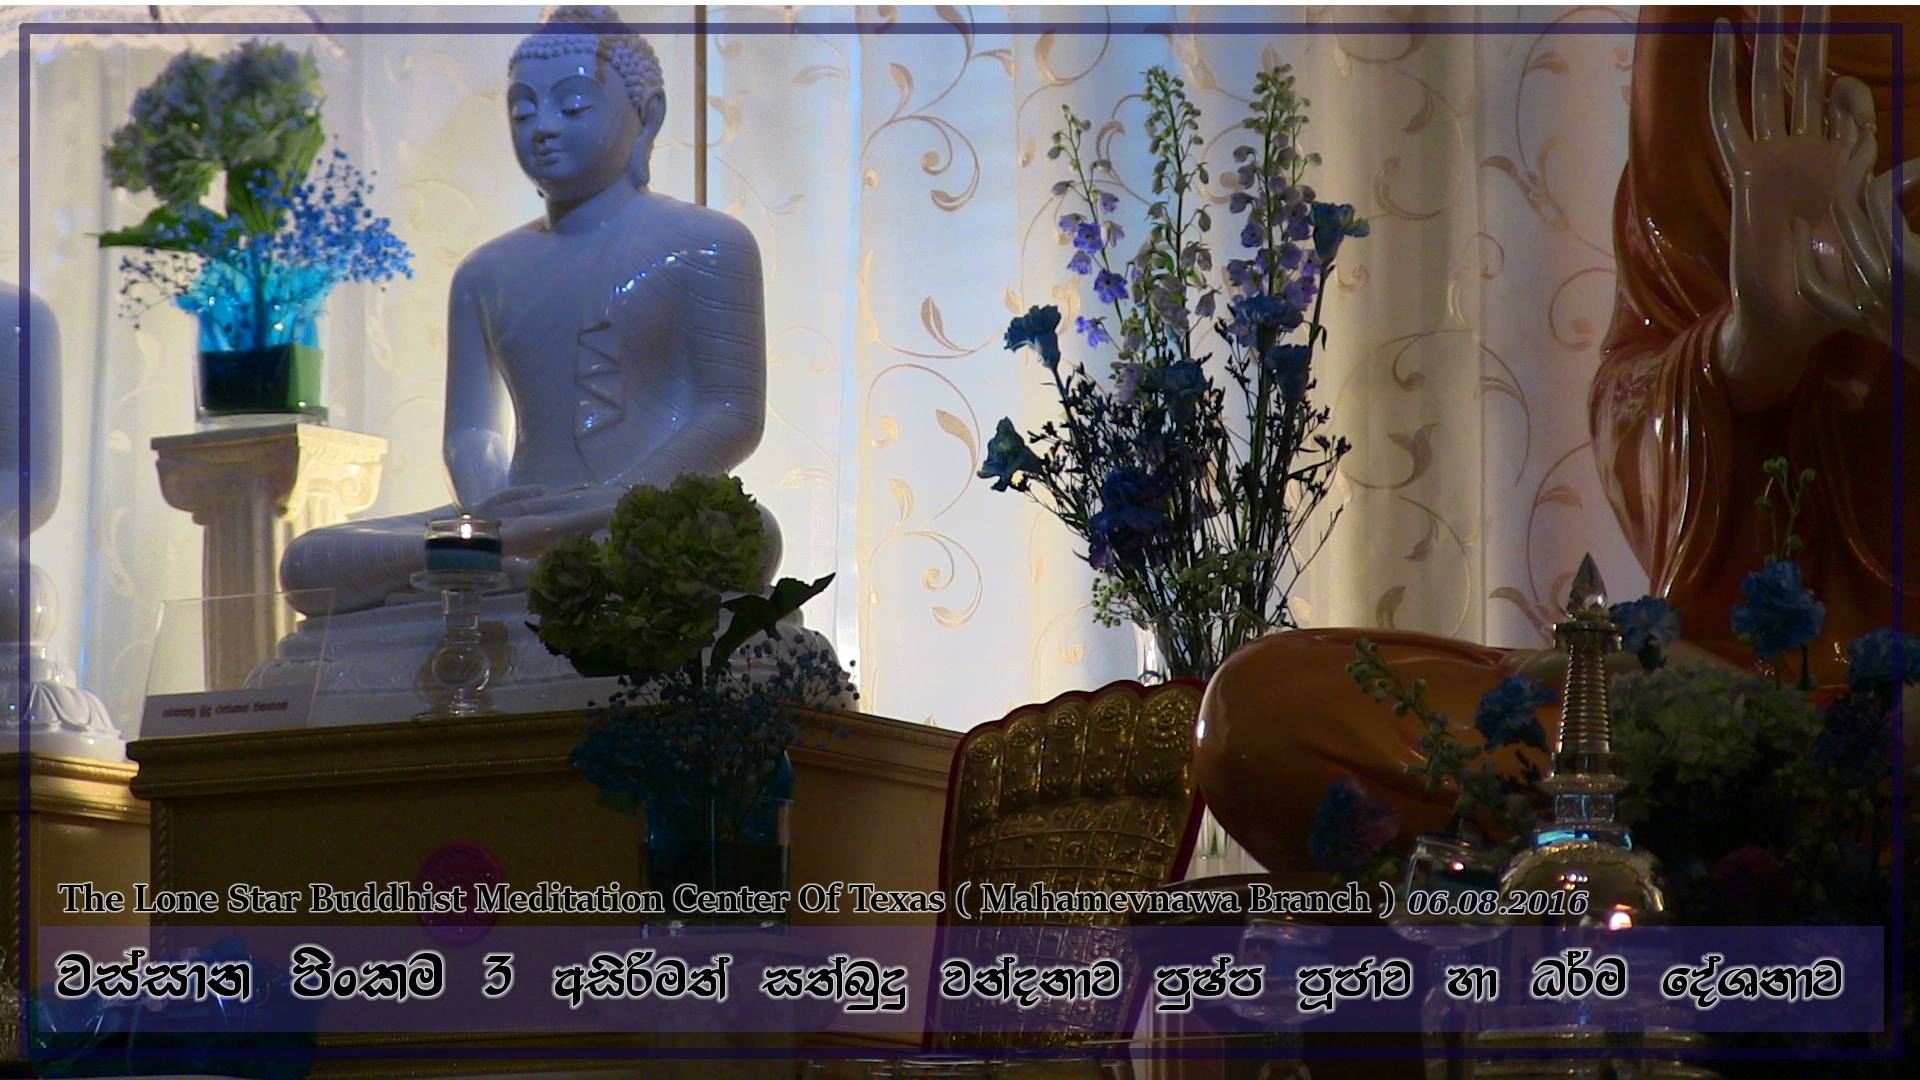 Mahamevnawa Buddhist Meditation Center